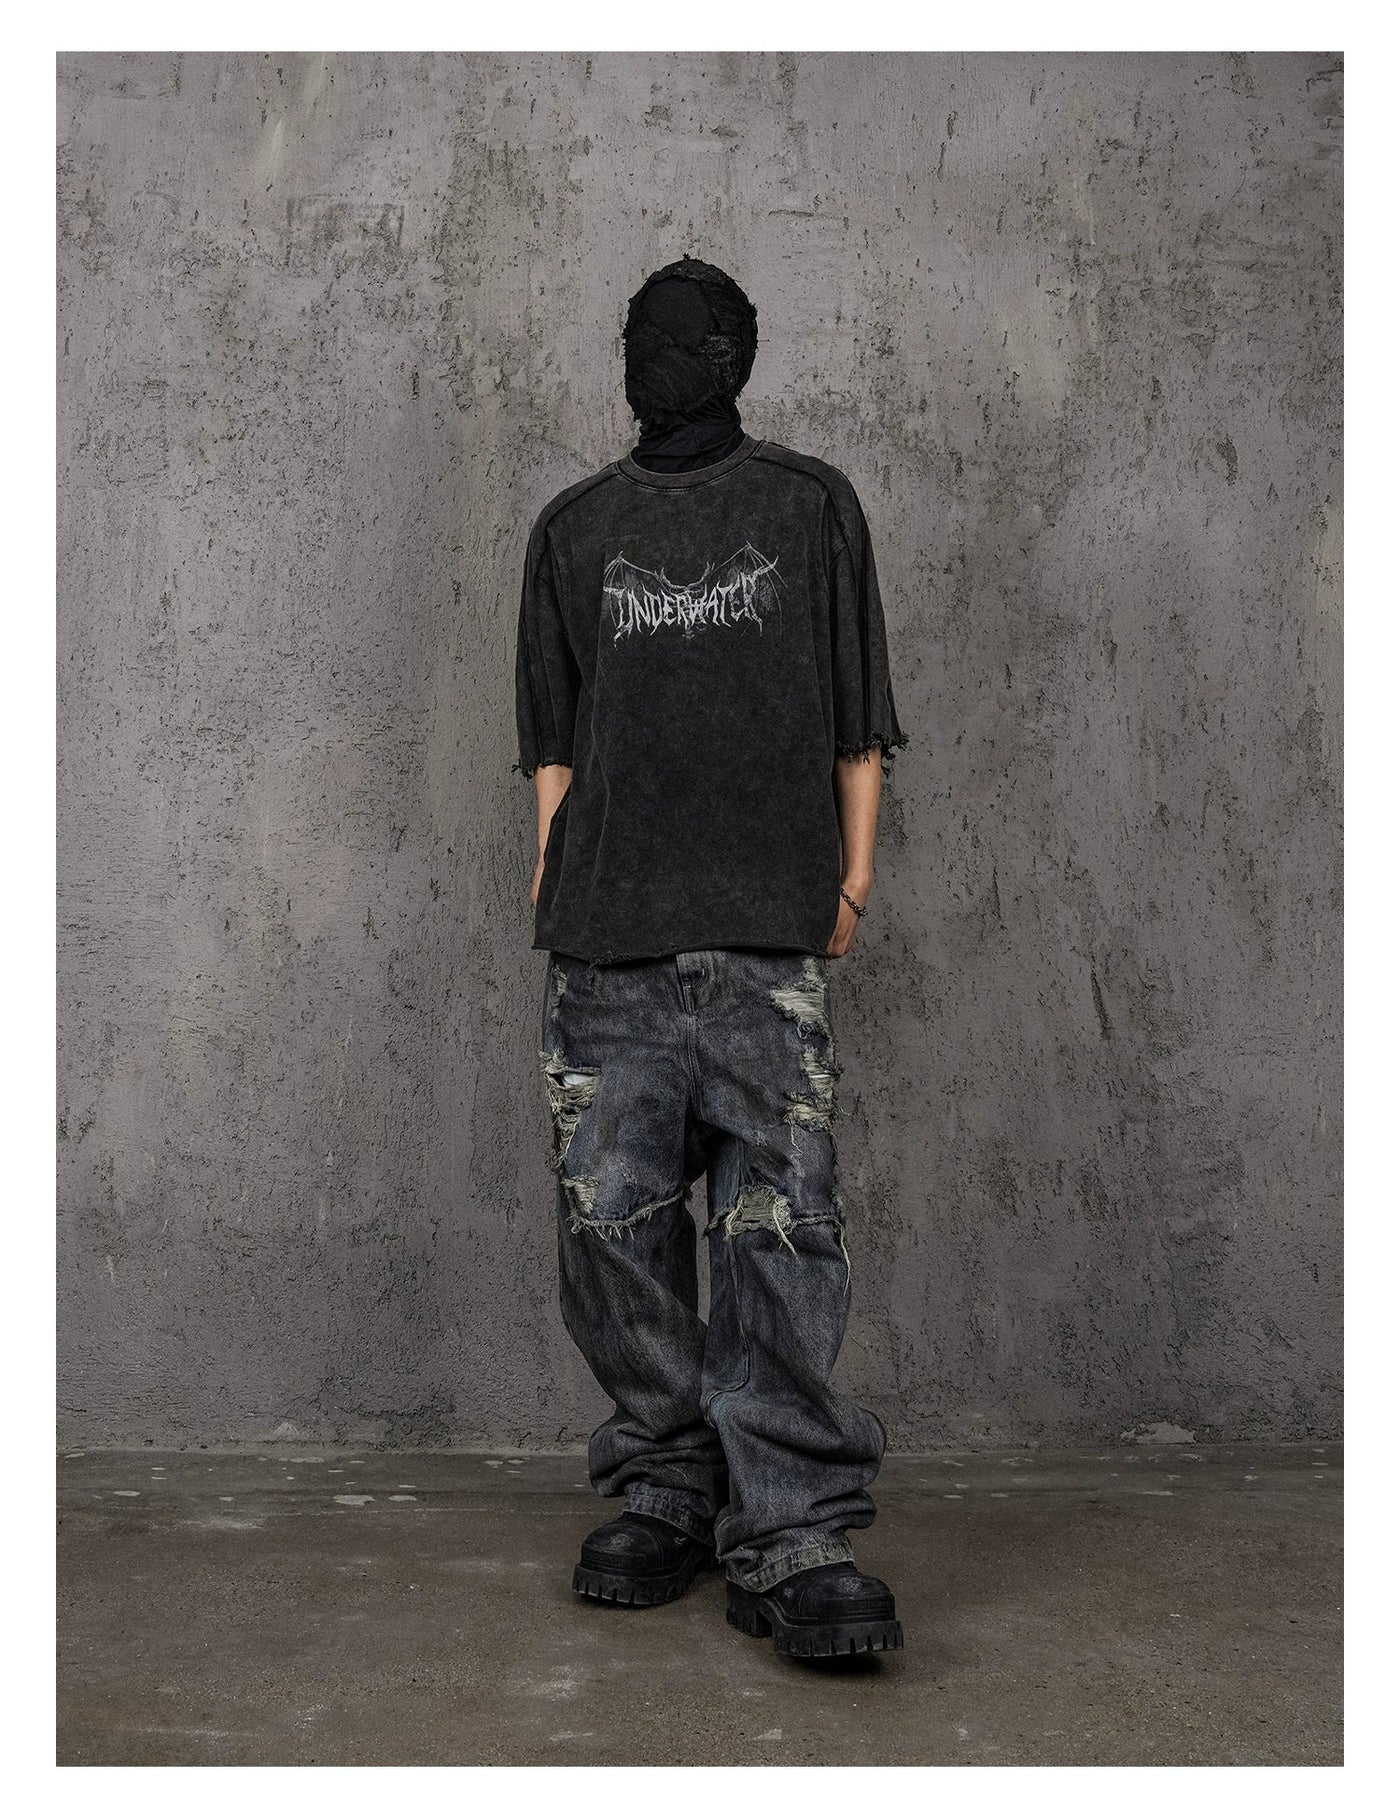 Raw Edges Grunge Printed T-Shirt Korean Street Fashion T-Shirt By Underwater Shop Online at OH Vault